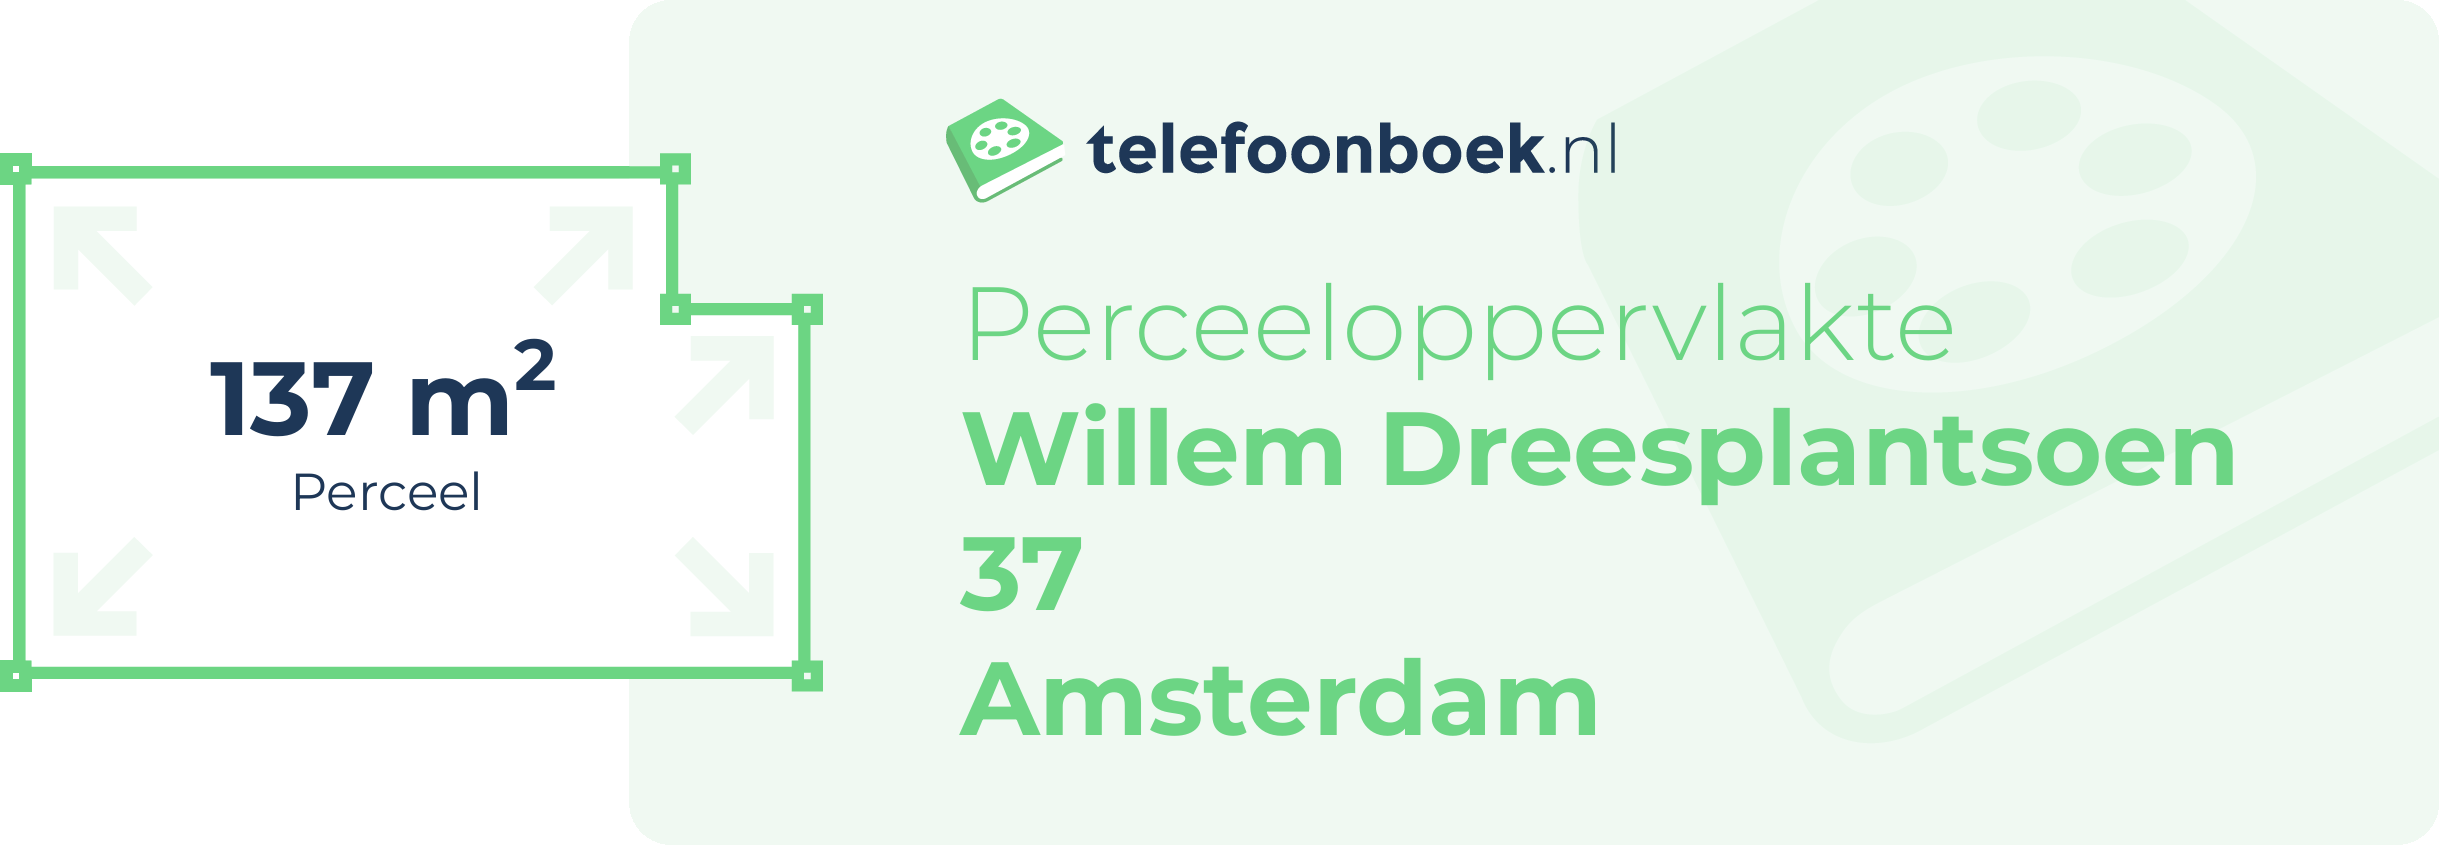 Perceeloppervlakte Willem Dreesplantsoen 37 Amsterdam